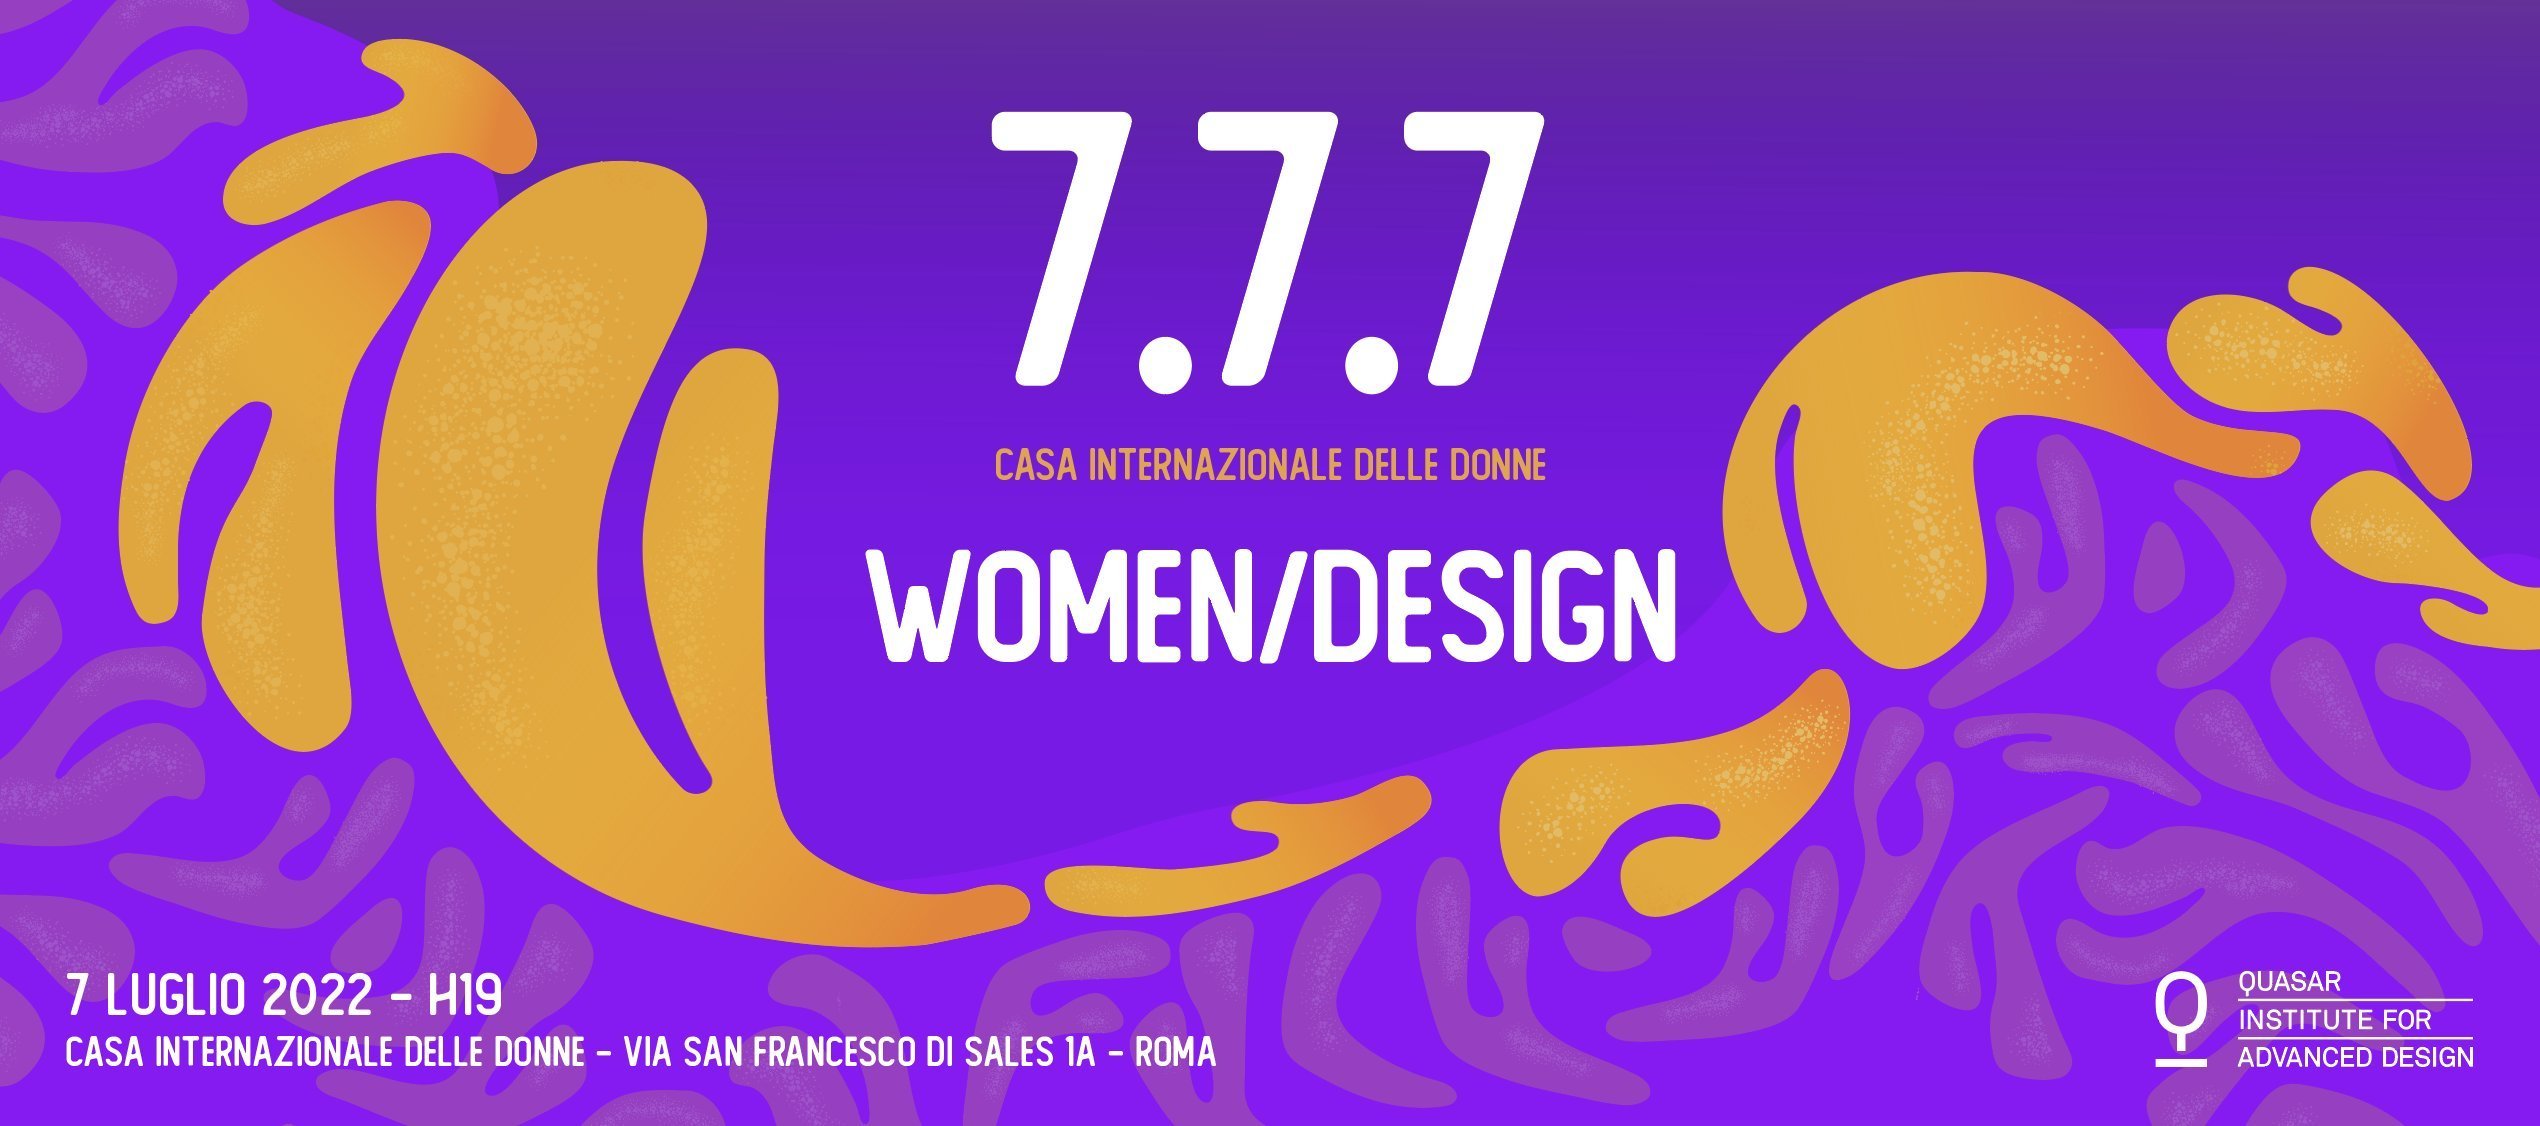 777 - Women/Design